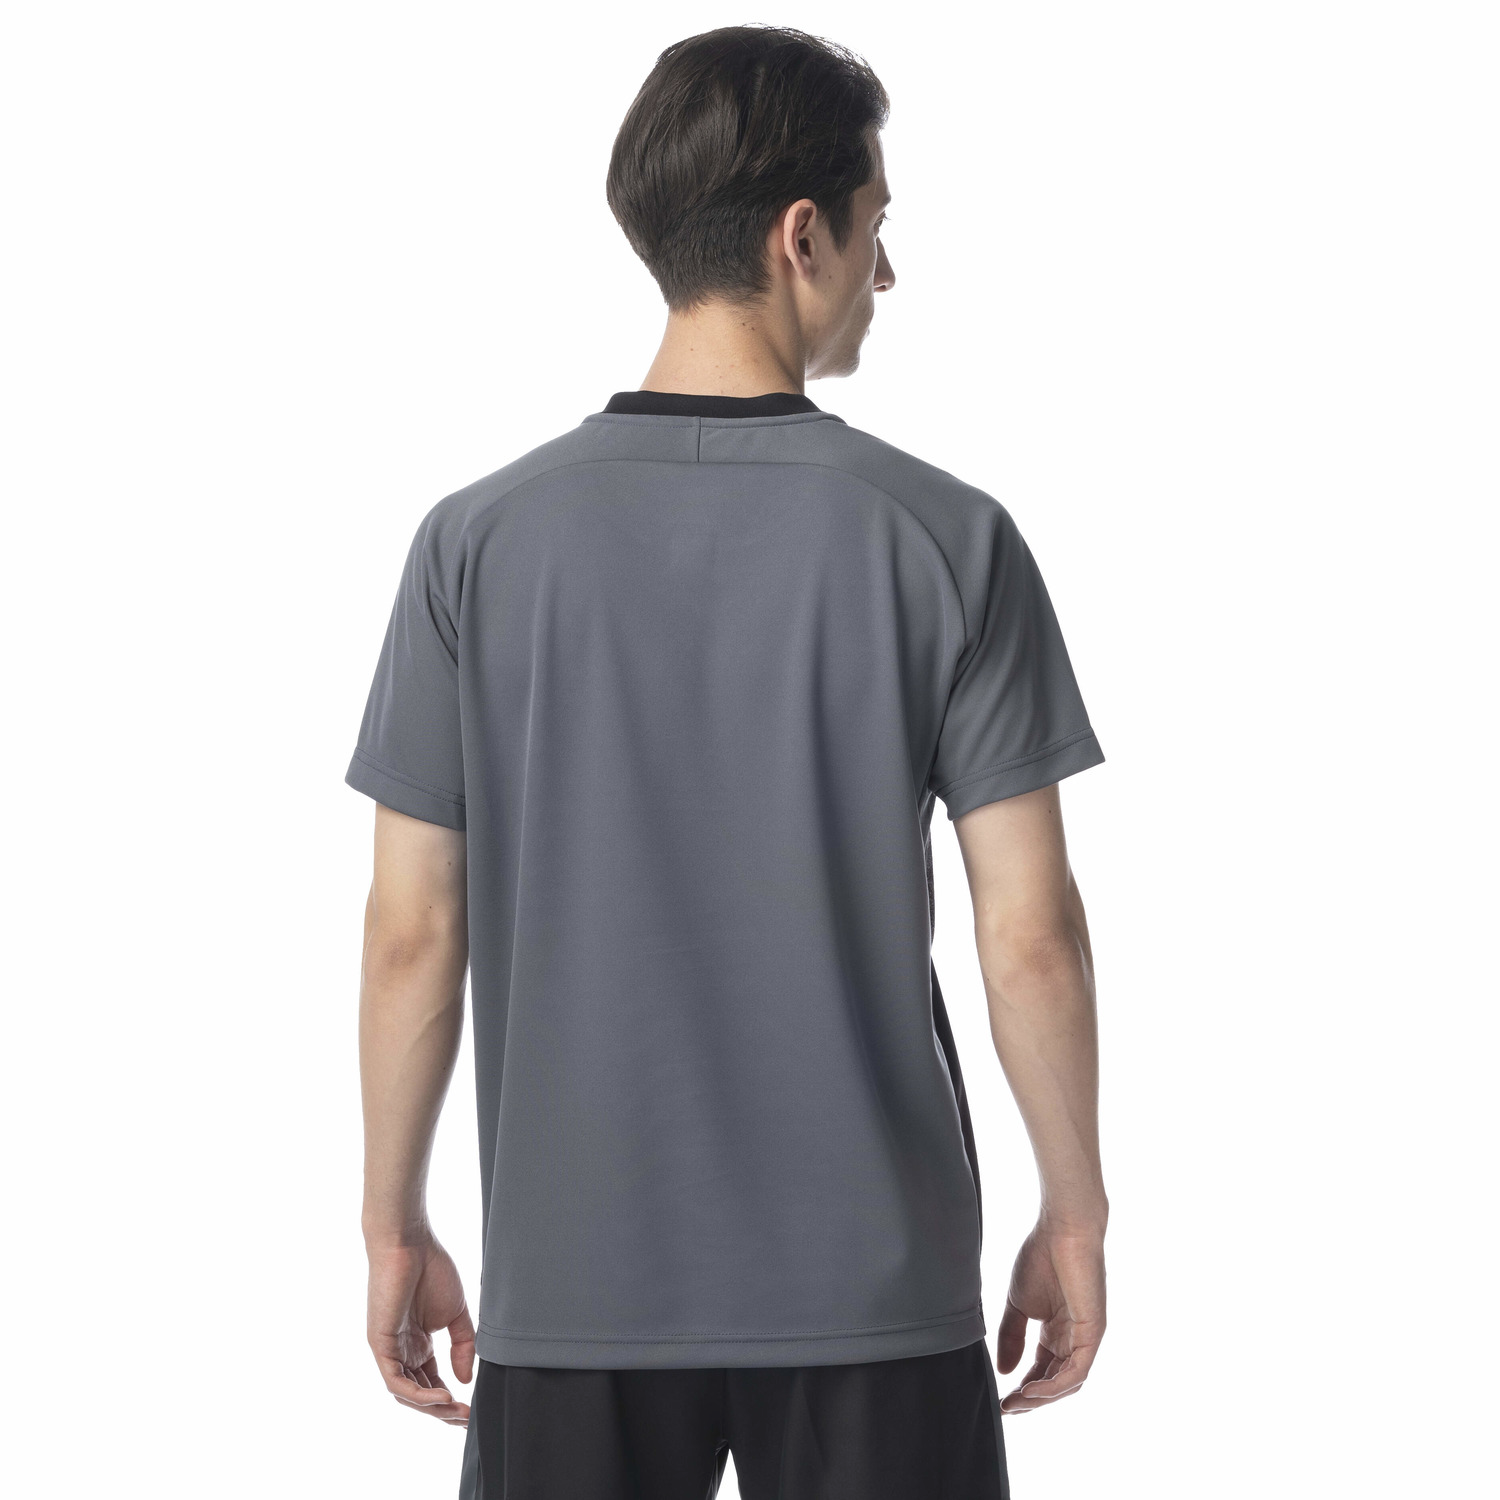 Yonex Premium Game Shirt 10537 Black (Made in Japan) MEN'S